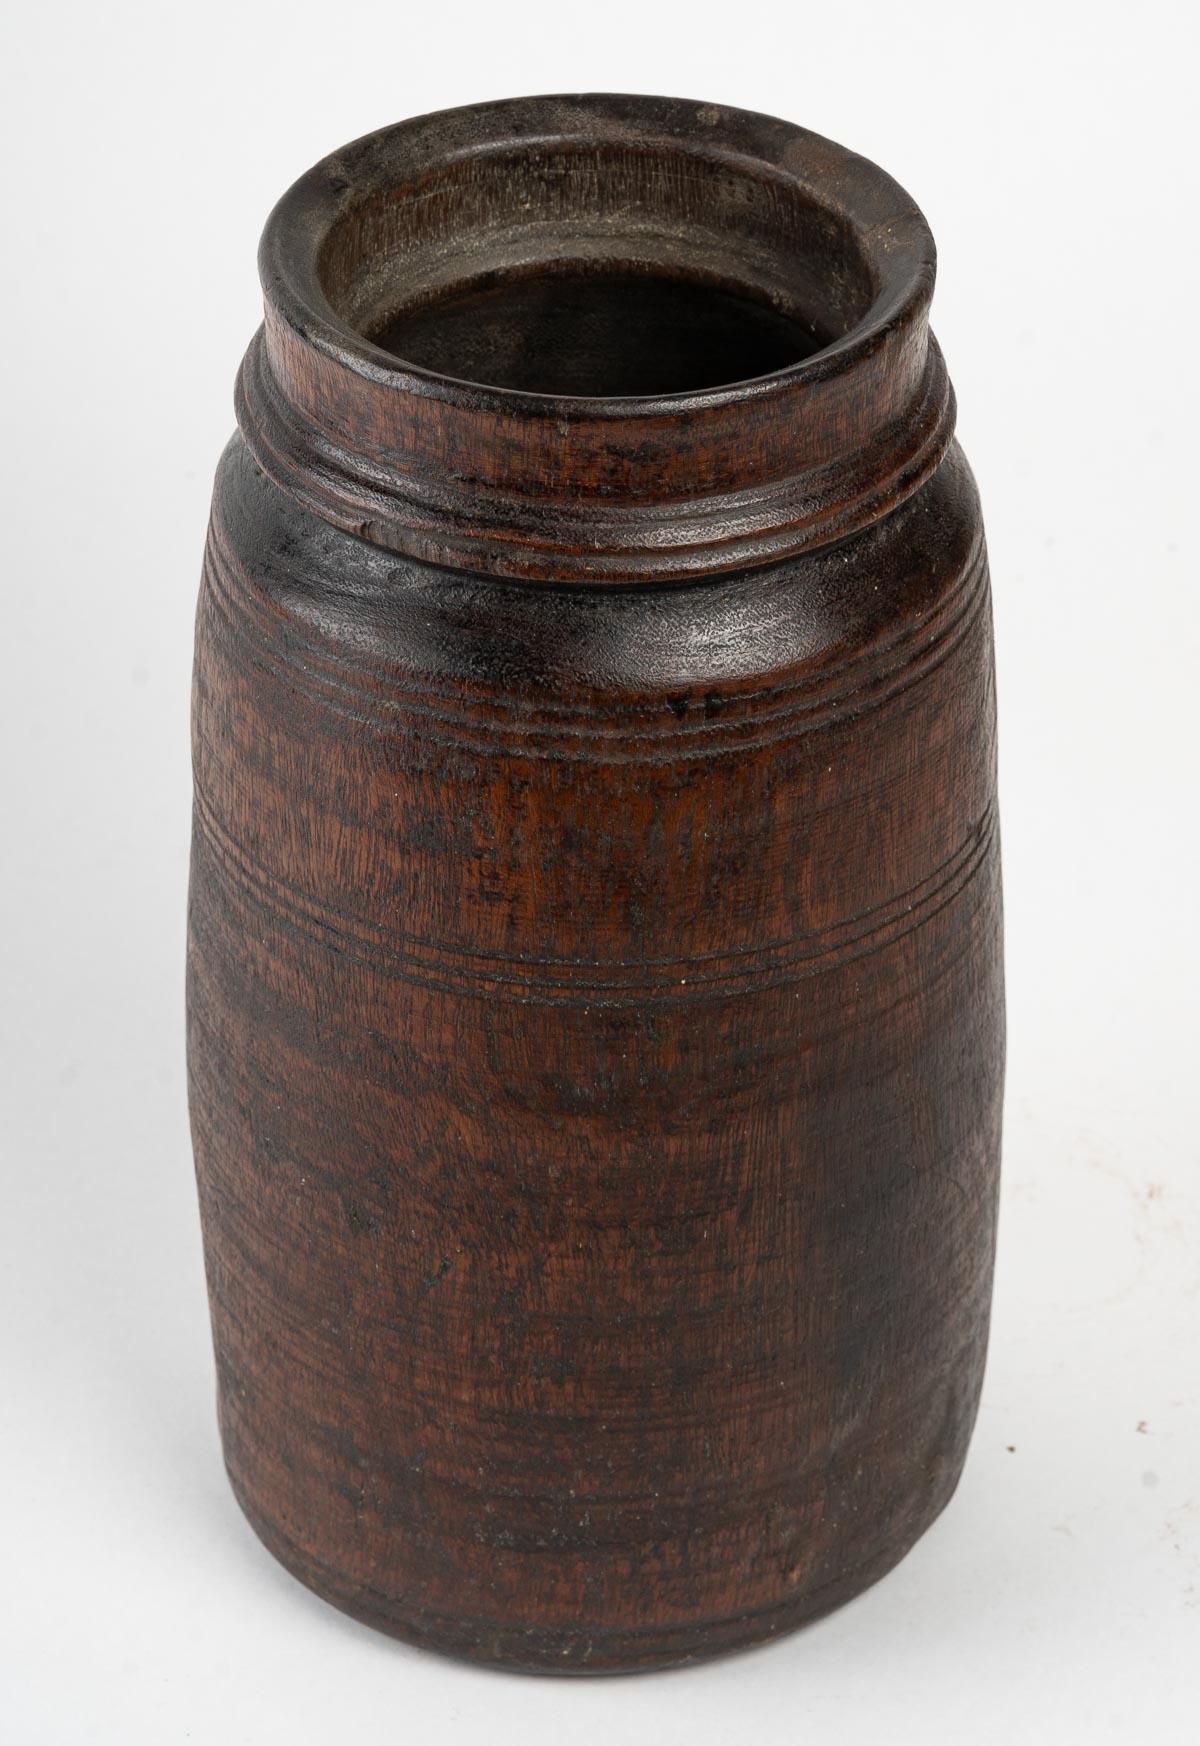 African art vase, wood, 20th century.
Measures: H: 29 cm, D: 17 cm.